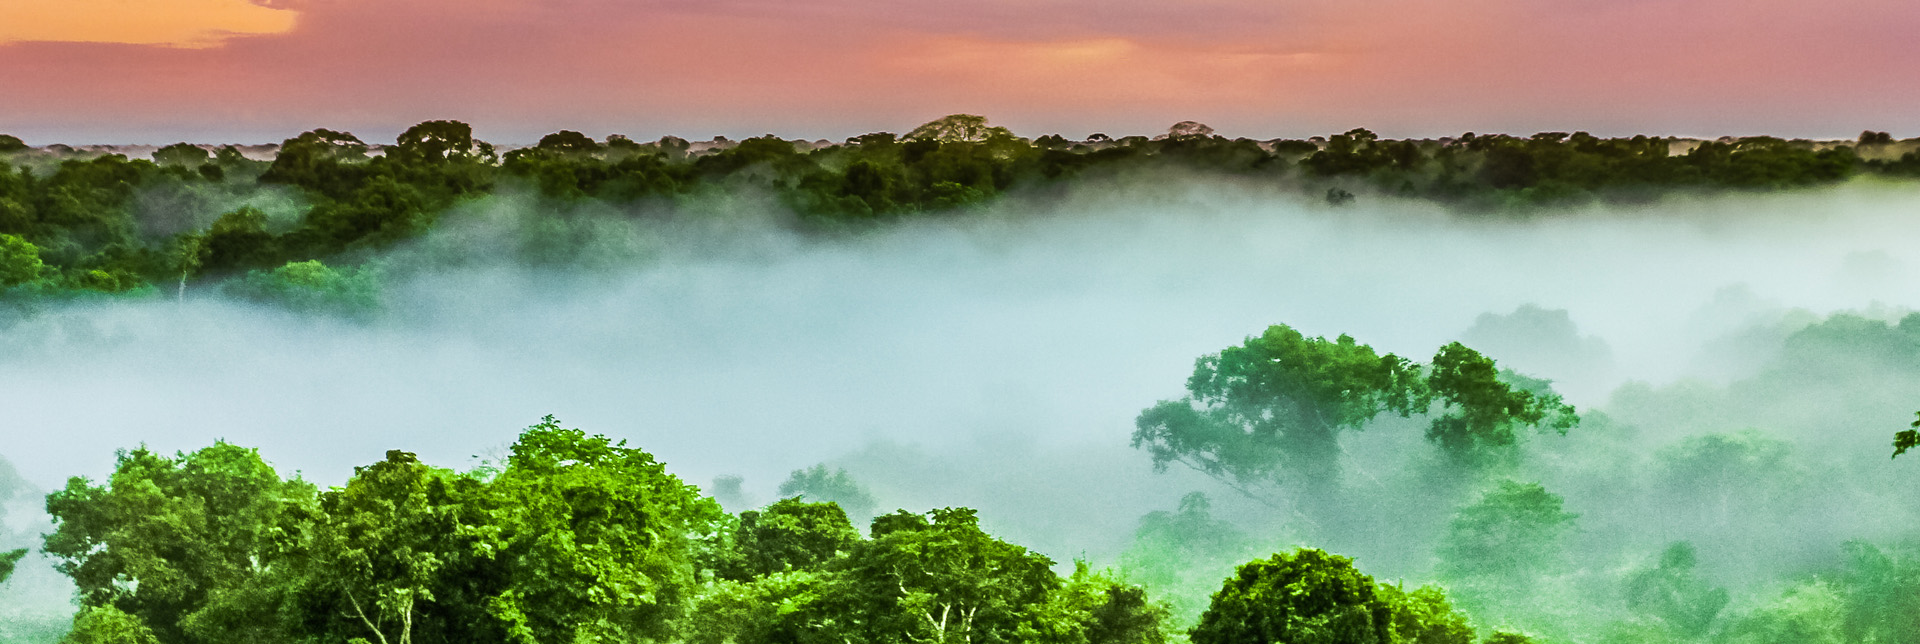 header-banner-deforestation-brazil-nuts_1.jpg